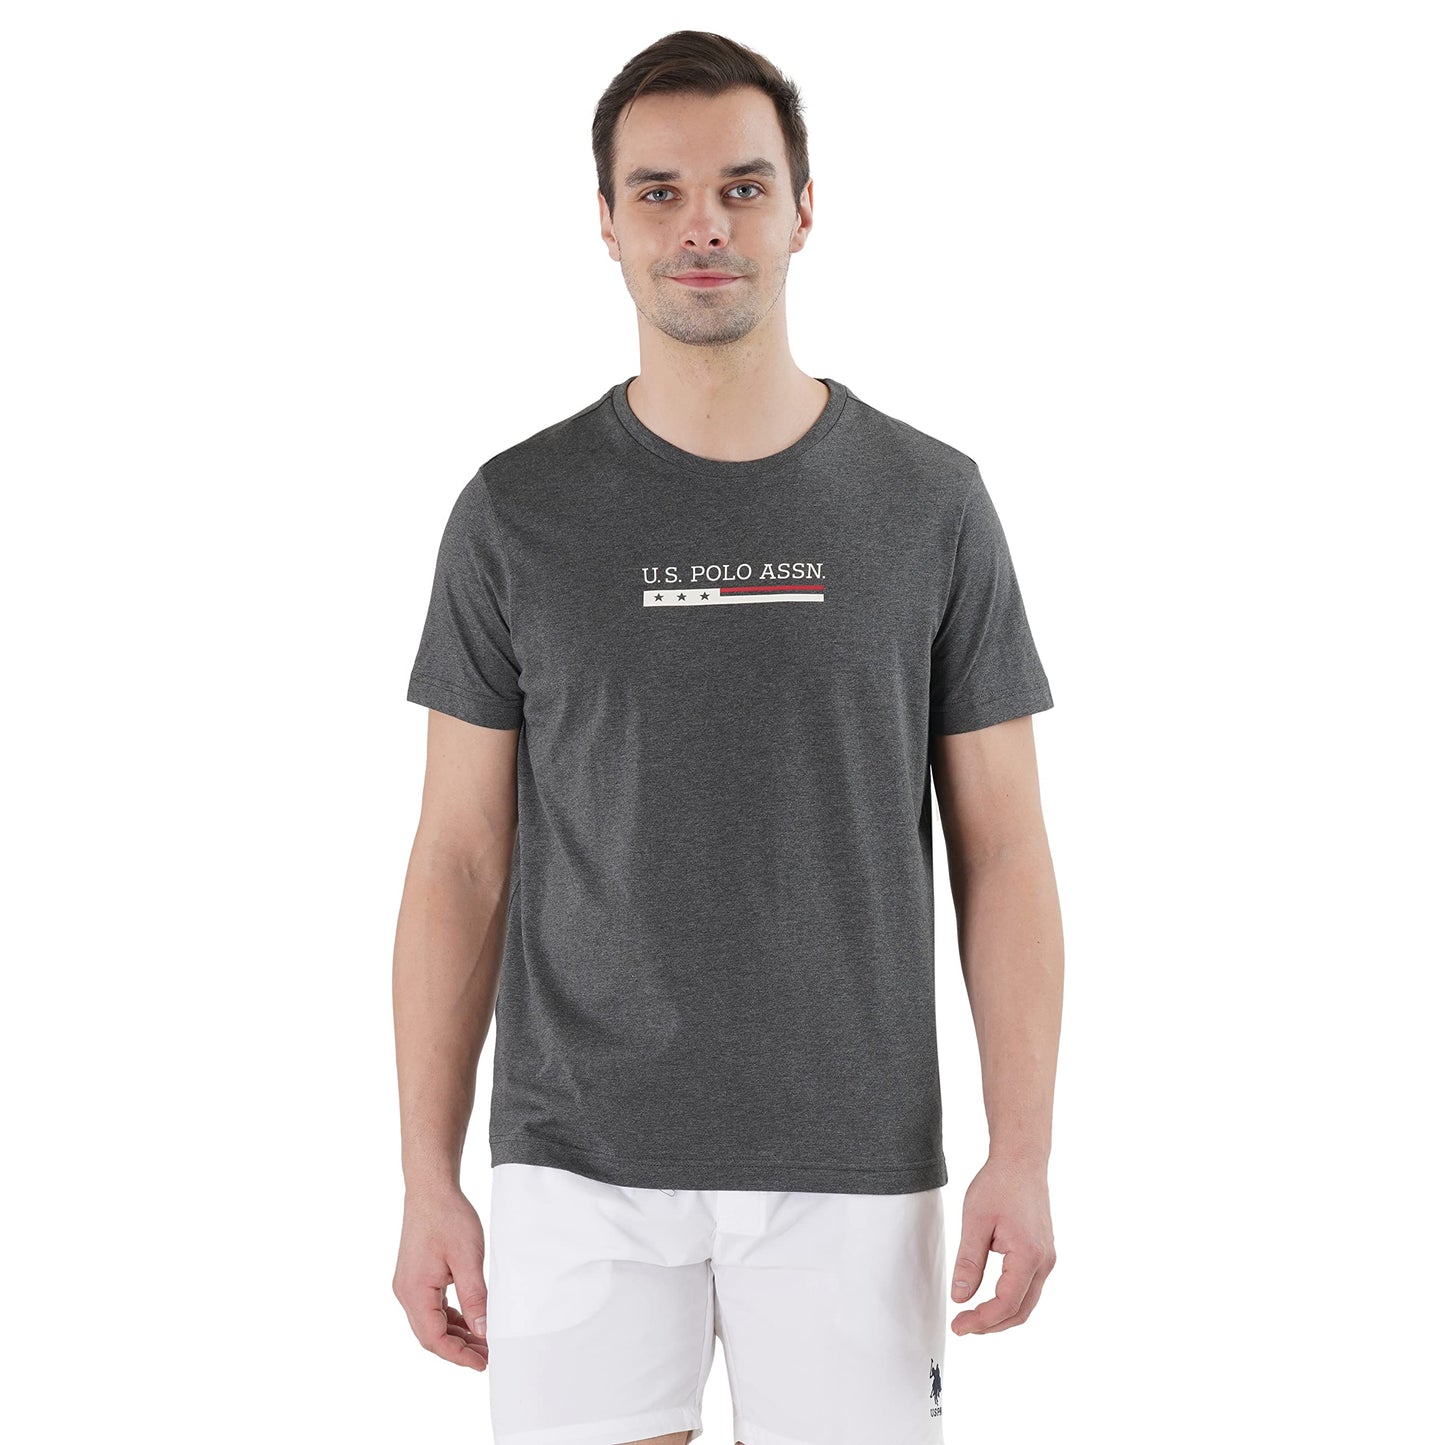 U.S. POLO ASSN. Men Crew Neck Brand Print LE001 Lounge T-Shirt - Pack of 1 (Anthra Mel L)